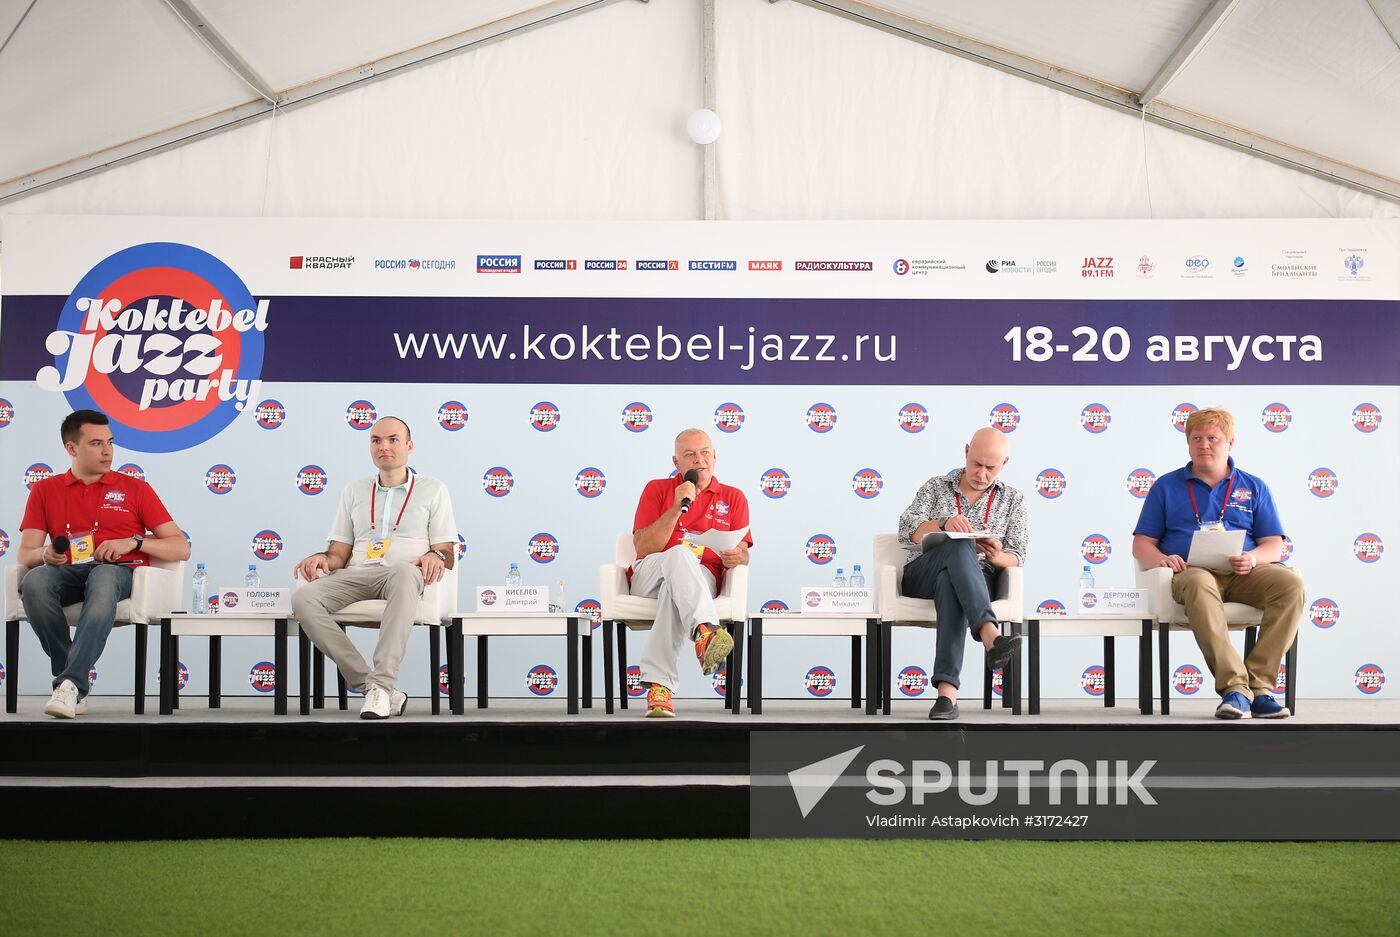 15th Koktebel Jazz Party International Music Festival